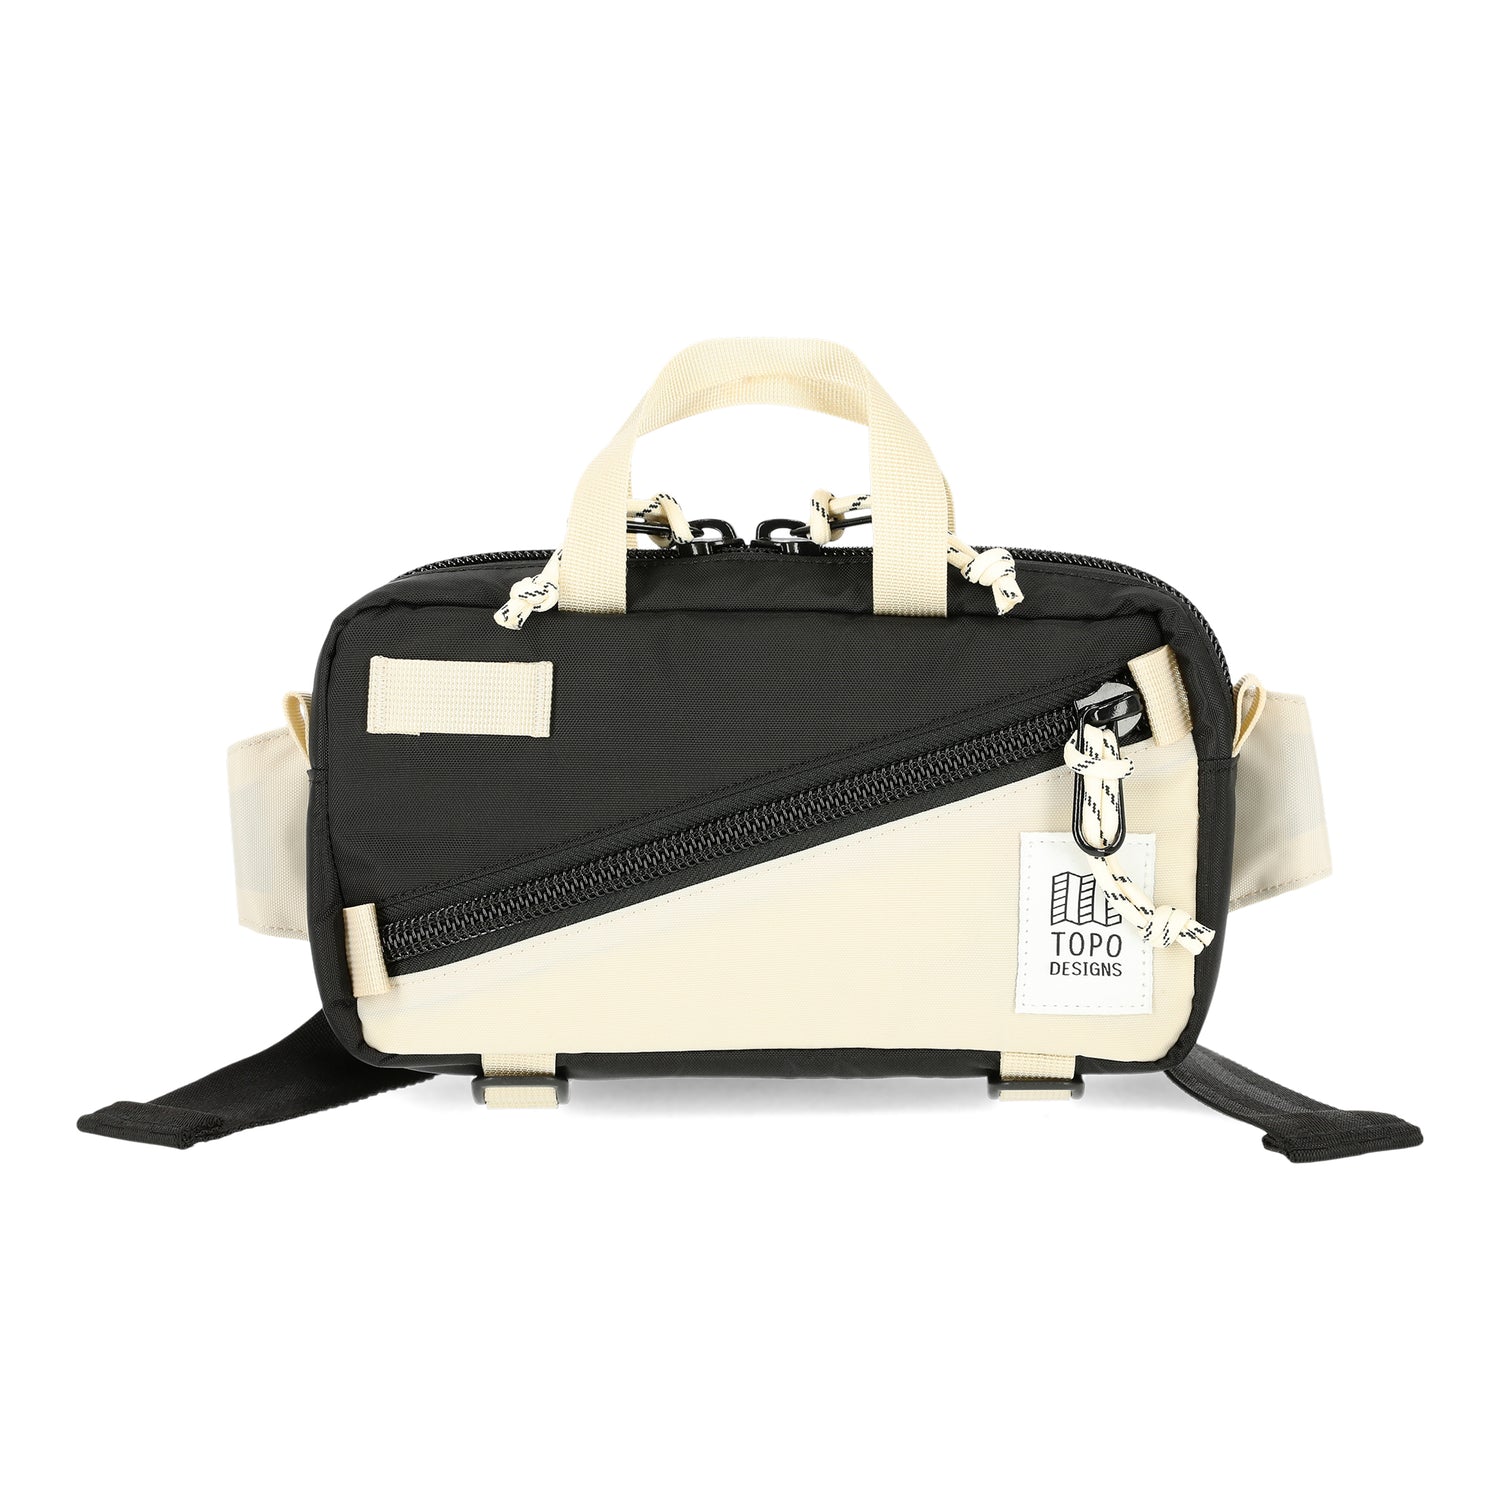 Topo Designs Mini Quick Pack - Black/Bone White